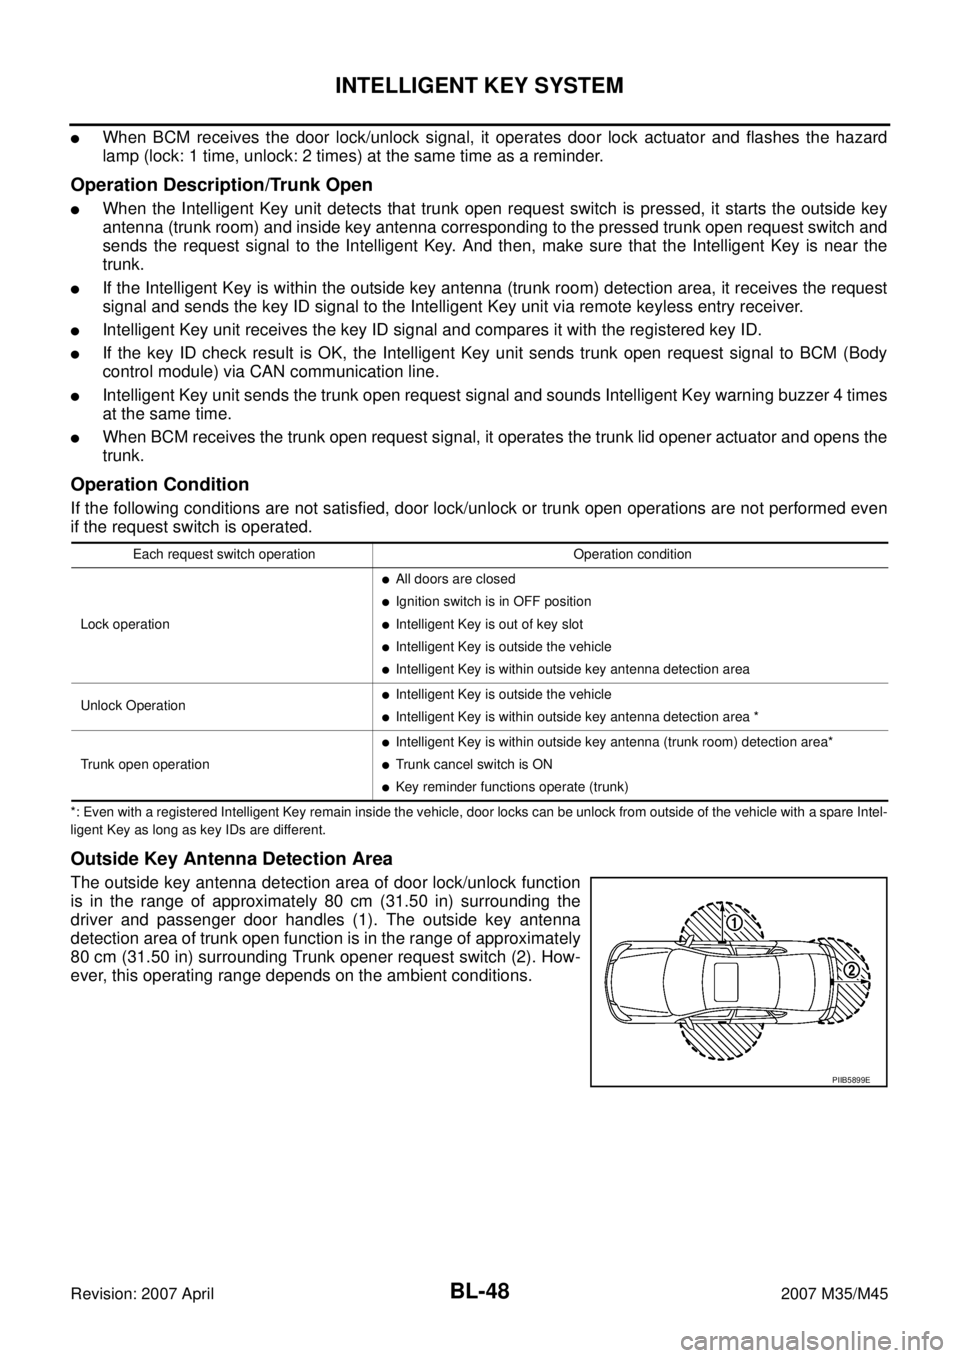 INFINITI M35 2007  Factory Service Manual BL-48
INTELLIGENT KEY SYSTEM
Revision: 2007 April2007 M35/M45
When BCM receives the door lock/unlock signal, it operates door lock actuator and flashes the hazard
lamp (lock: 1 time, unlock: 2 times)